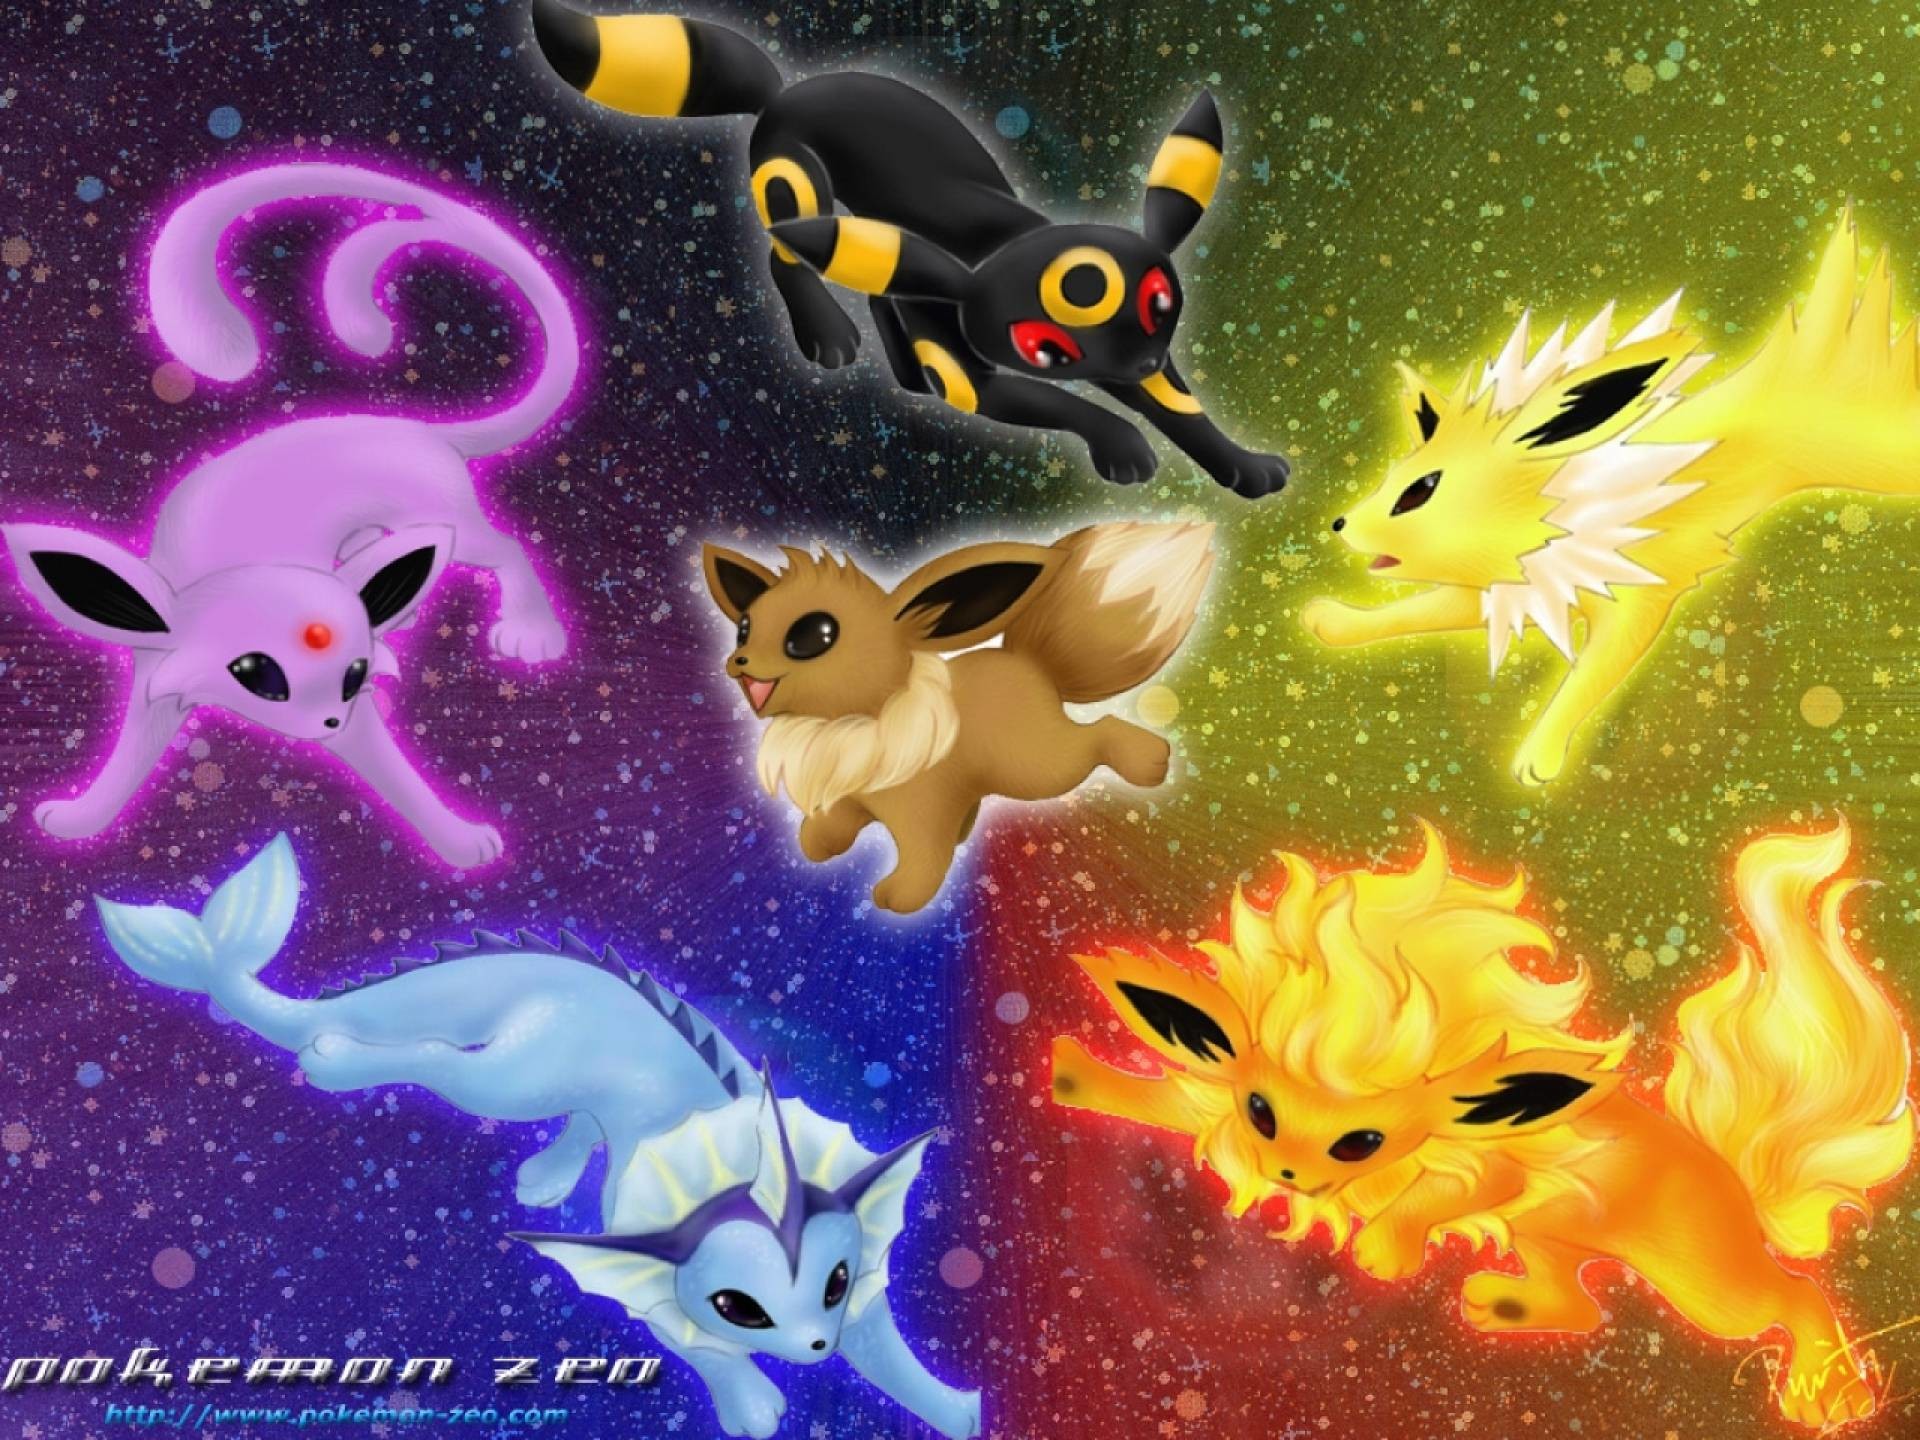 Download Legendary Pokémon wallpapers for mobile phone free Legendary  Pokémon HD pictures